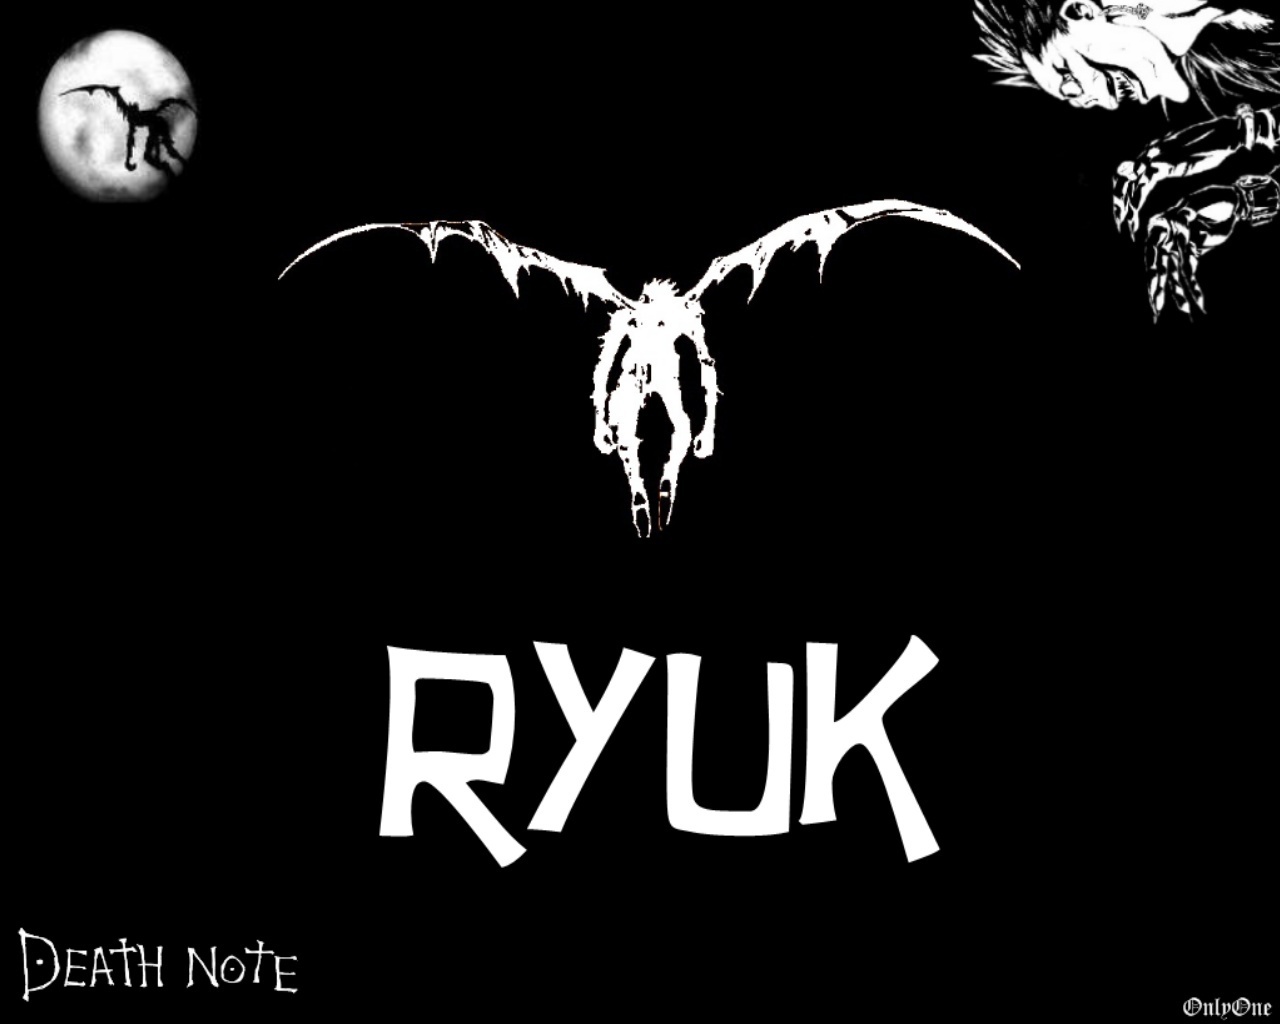 Ryuk Image HD Wallpaper And Background Photos